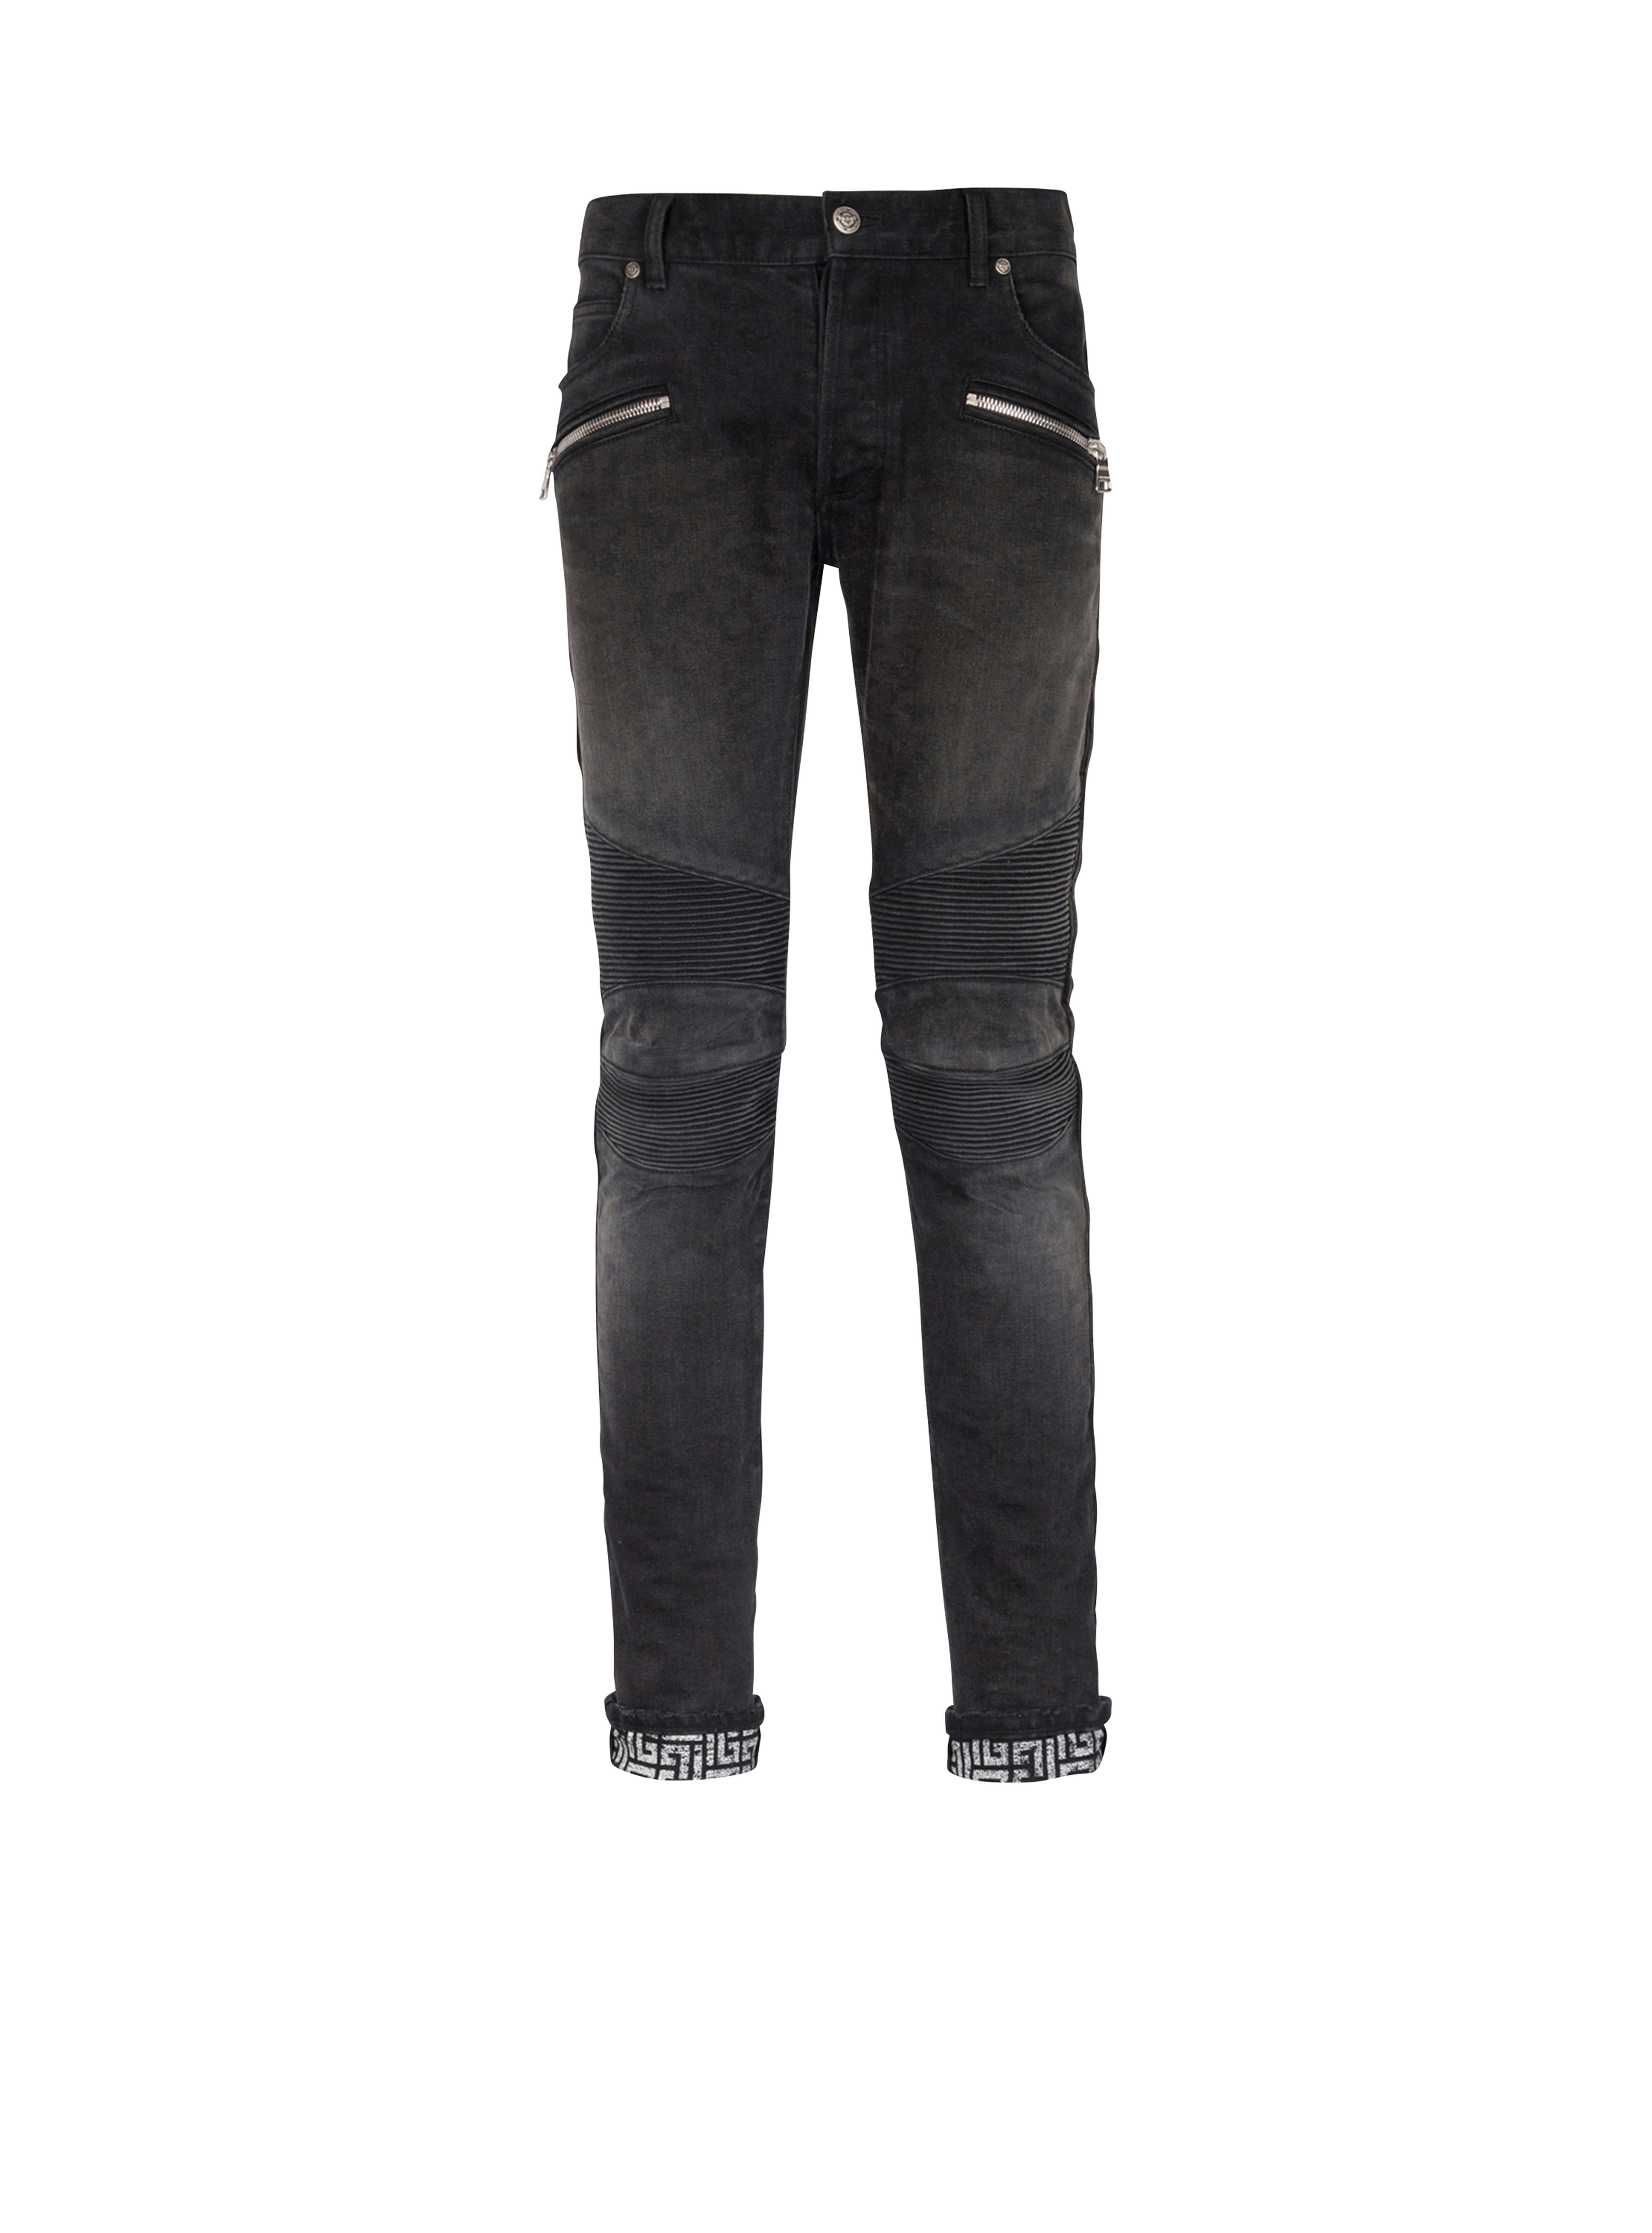 Slim cut faded and ridged cotton jeans with Balmain monogram on hem, black